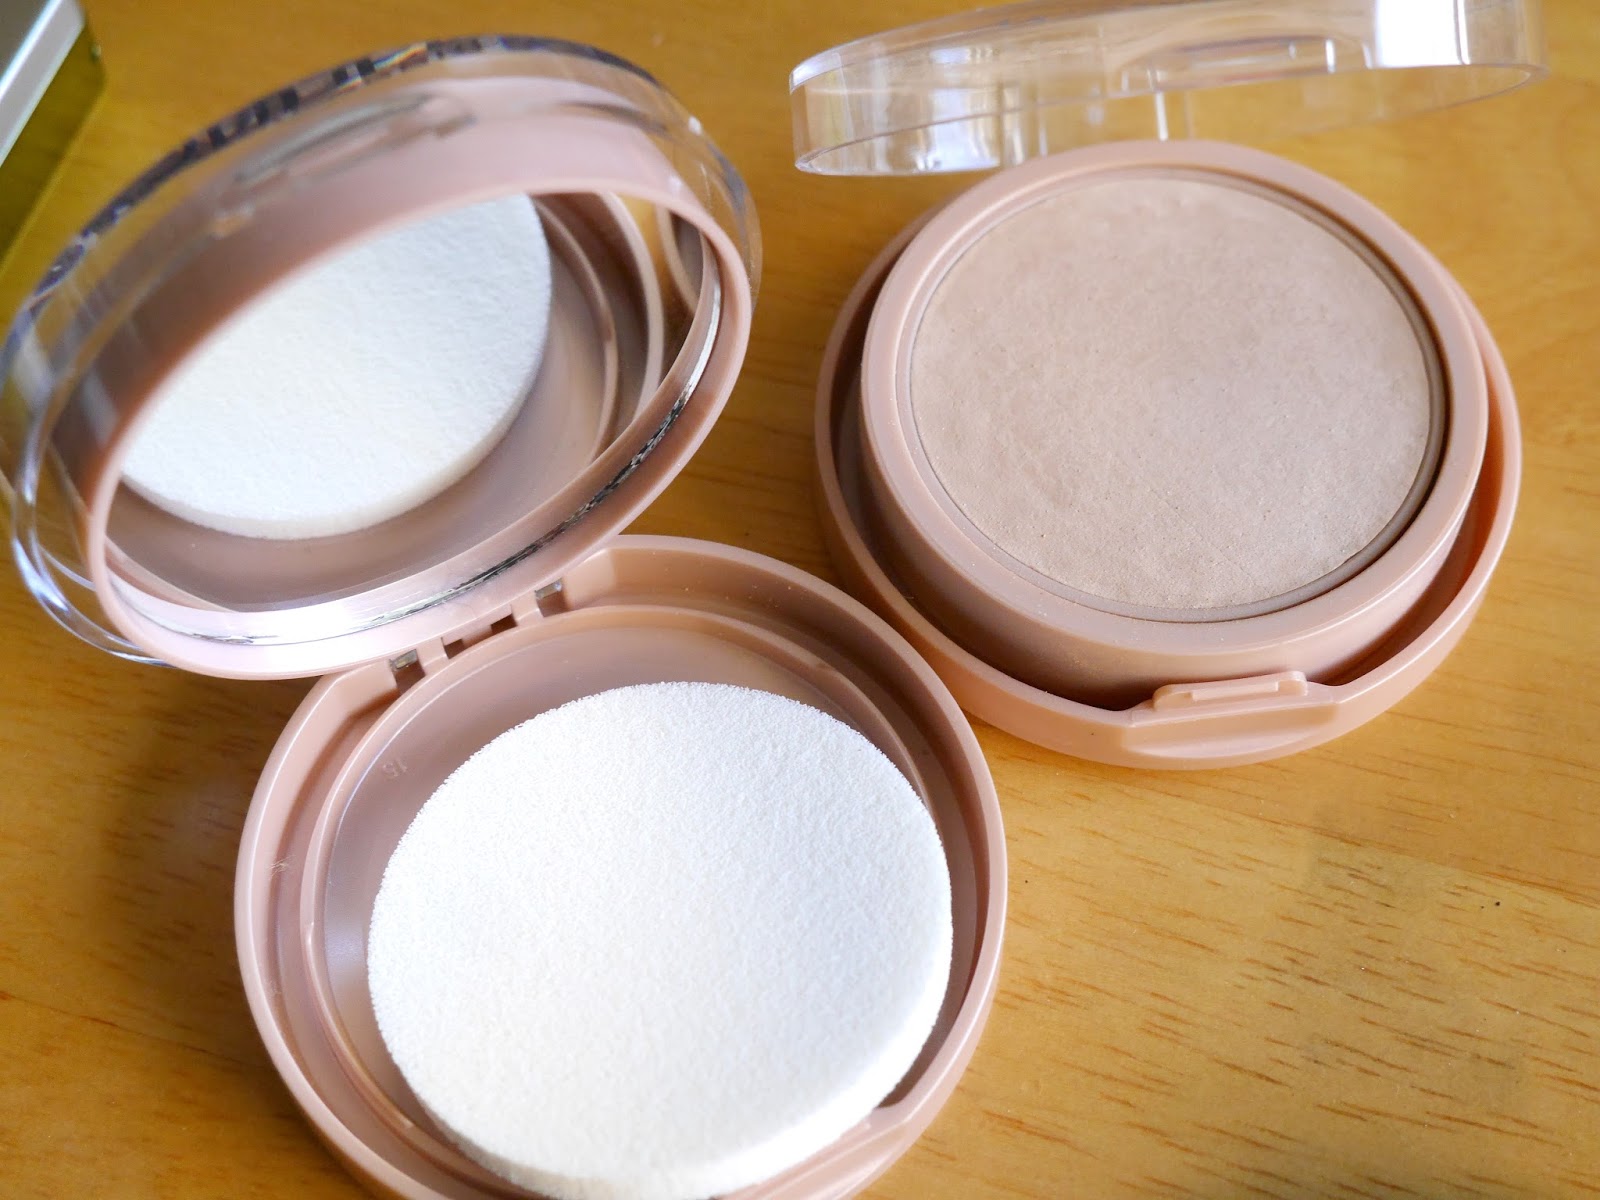 Maybelline Dream Powder review swatch classic ivory sandy beige